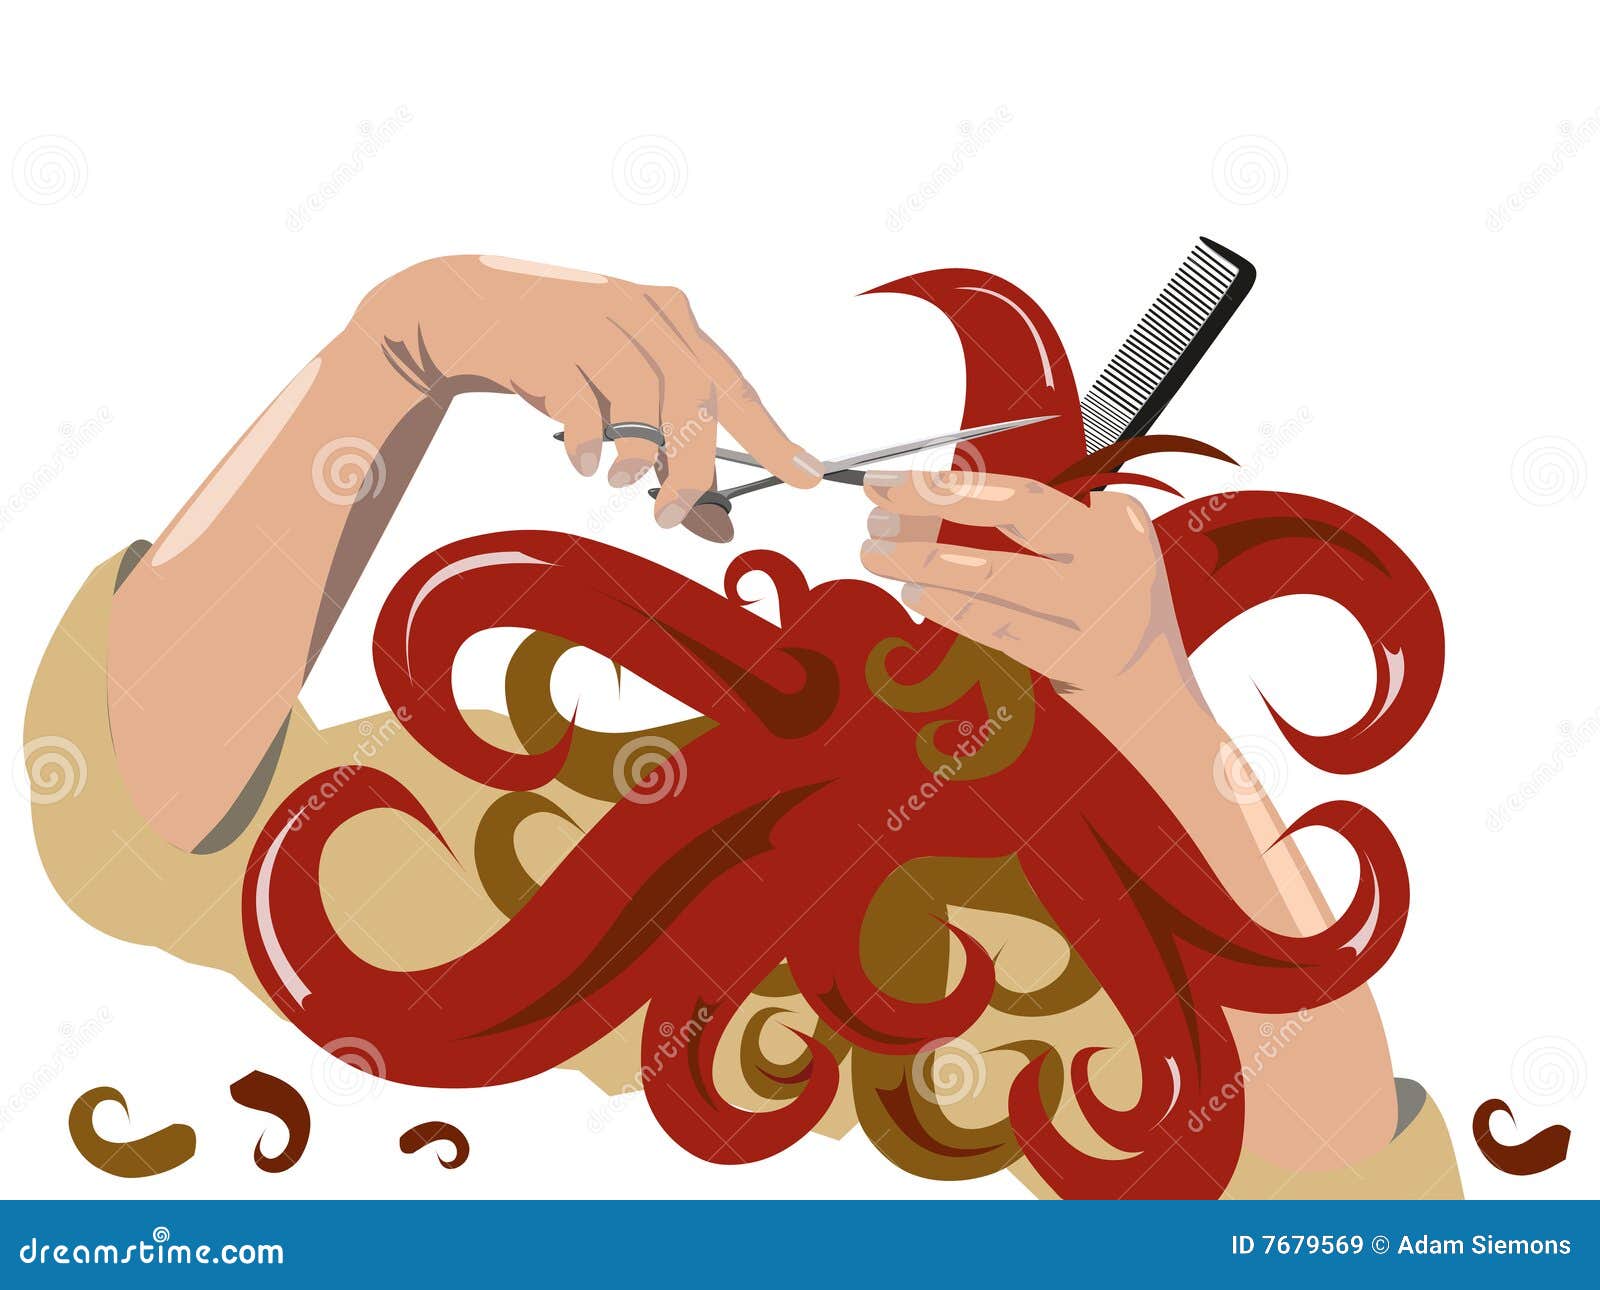 Hairdresser stock vector. Illustration of scissors, comb - 7679569